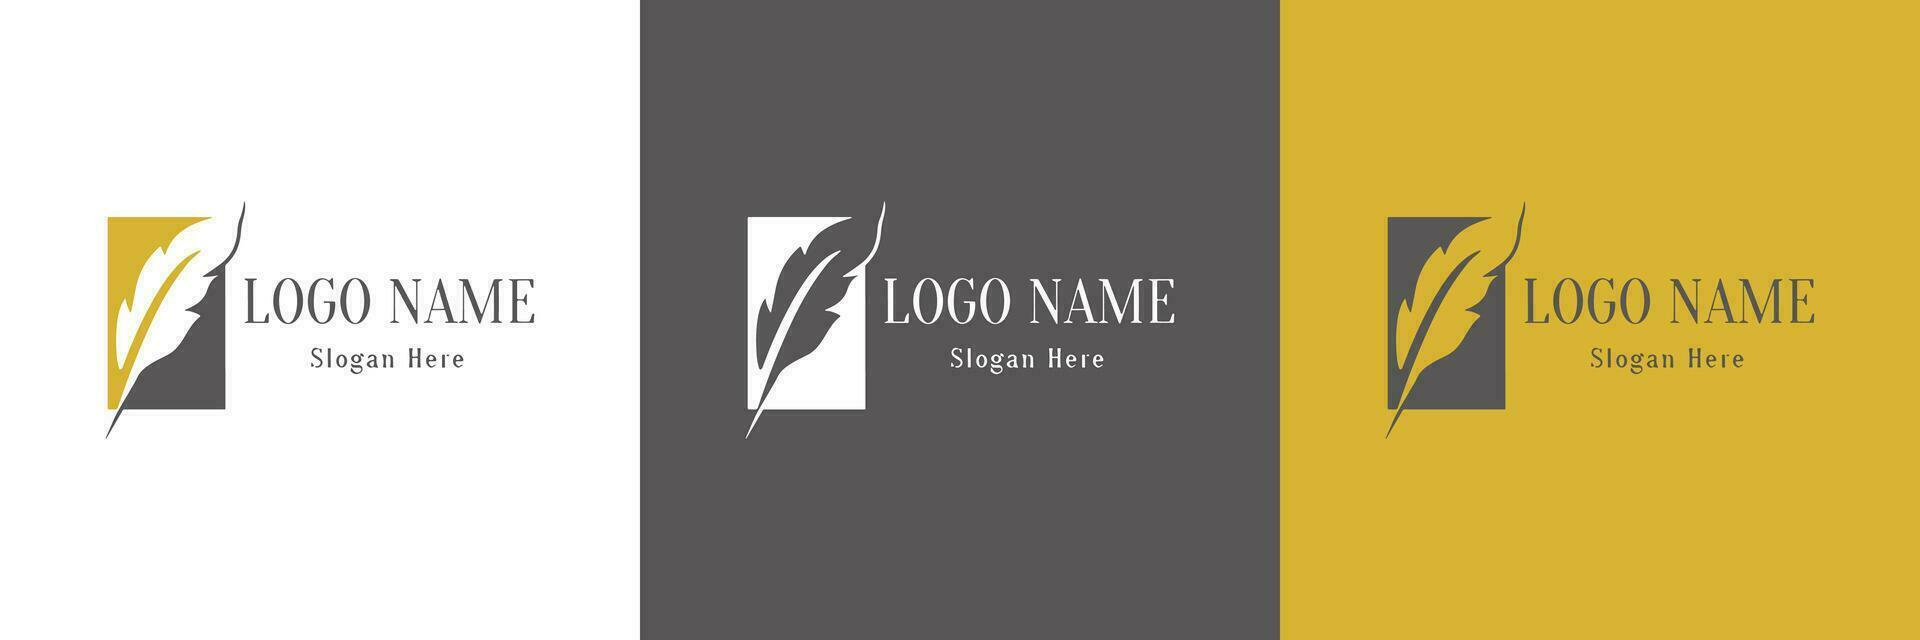 Education Logotype concept. Logo design template. Vector illustration.